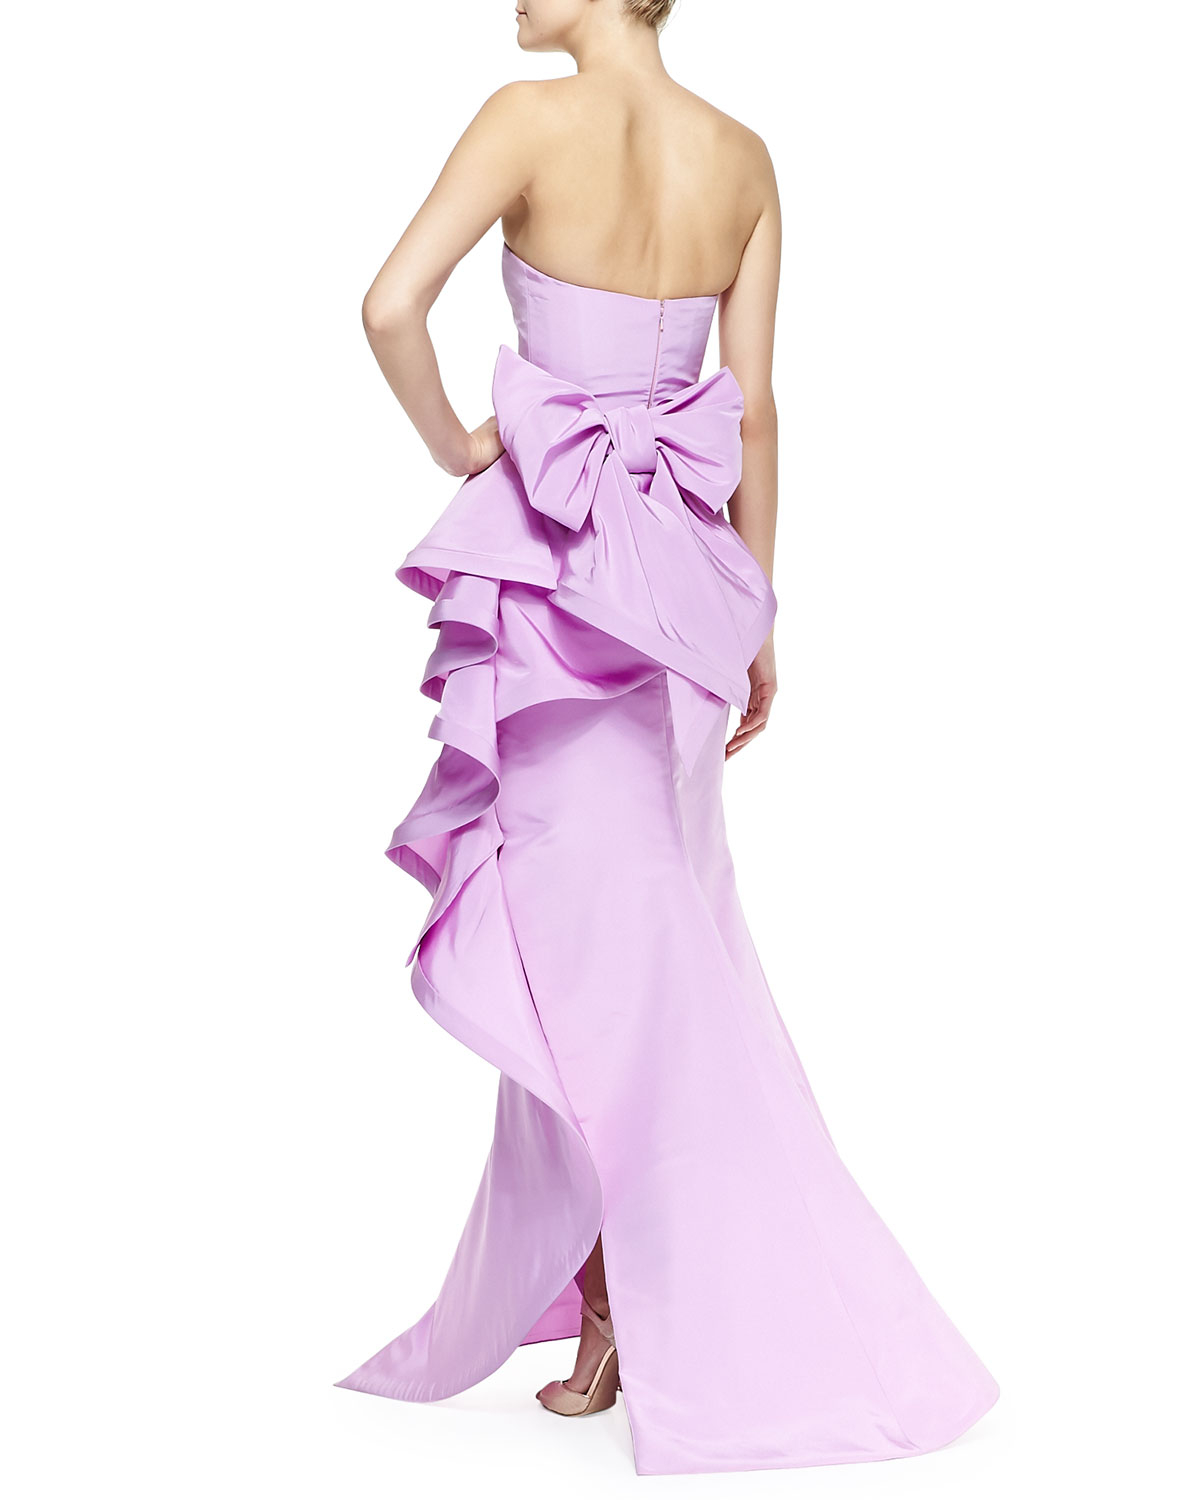 oscar de la renta purple dress